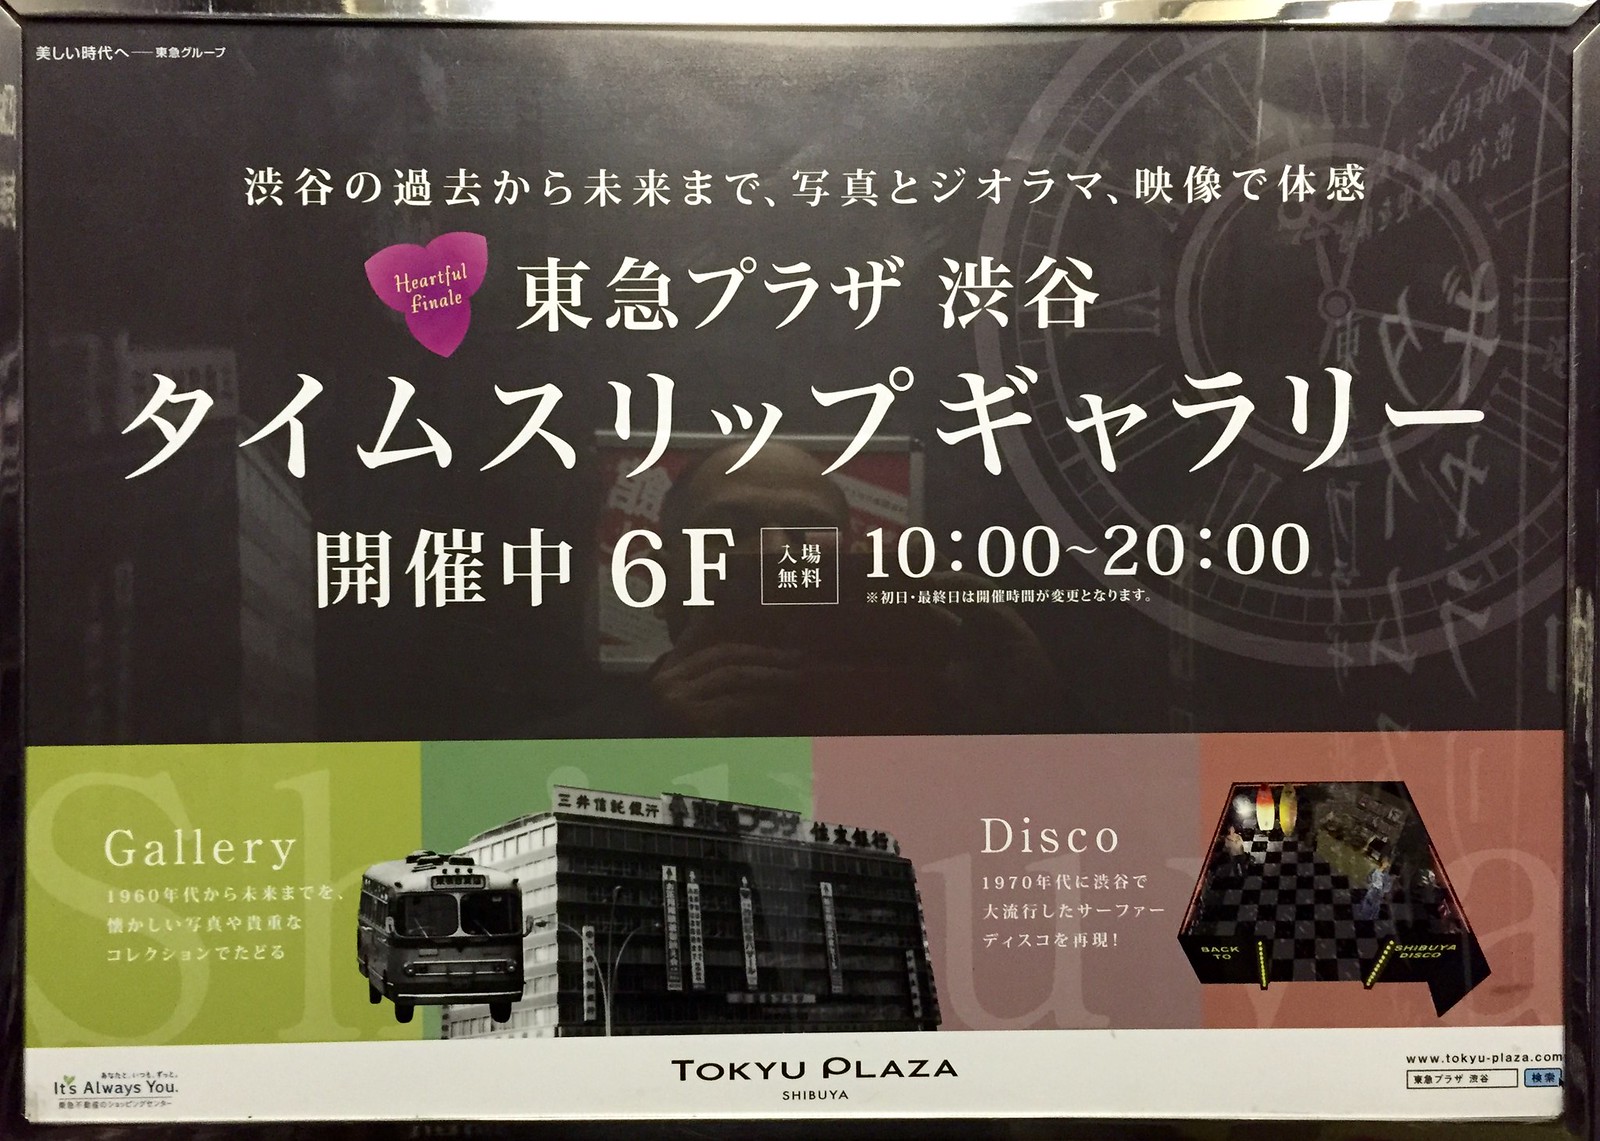 Timeslip Photo Gallery at Tokyu Plaza